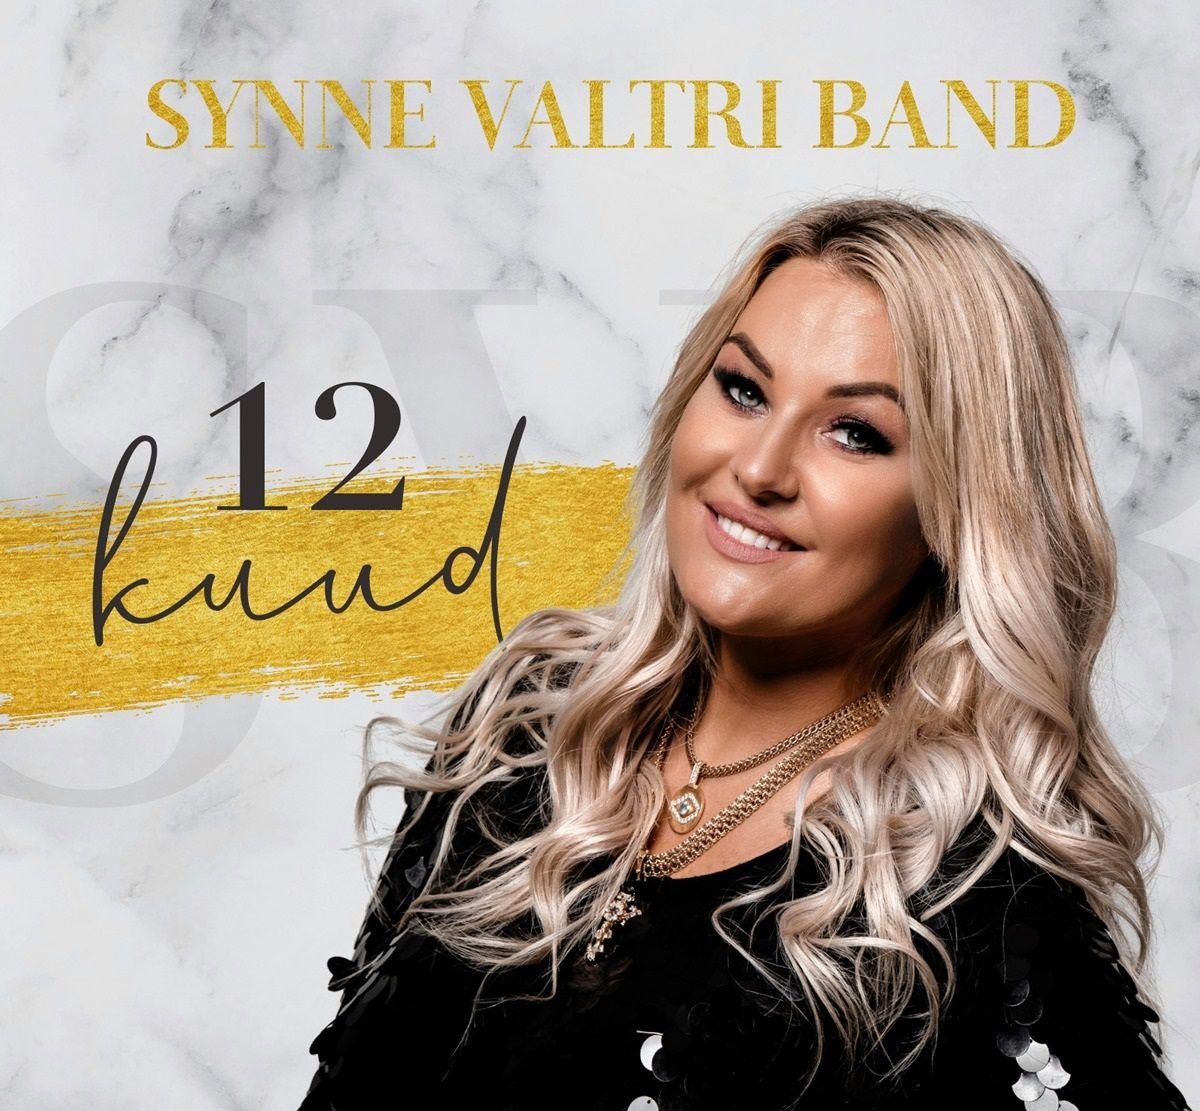 SYNNE VALTRI BAND - 12 KUUD (2020) CD